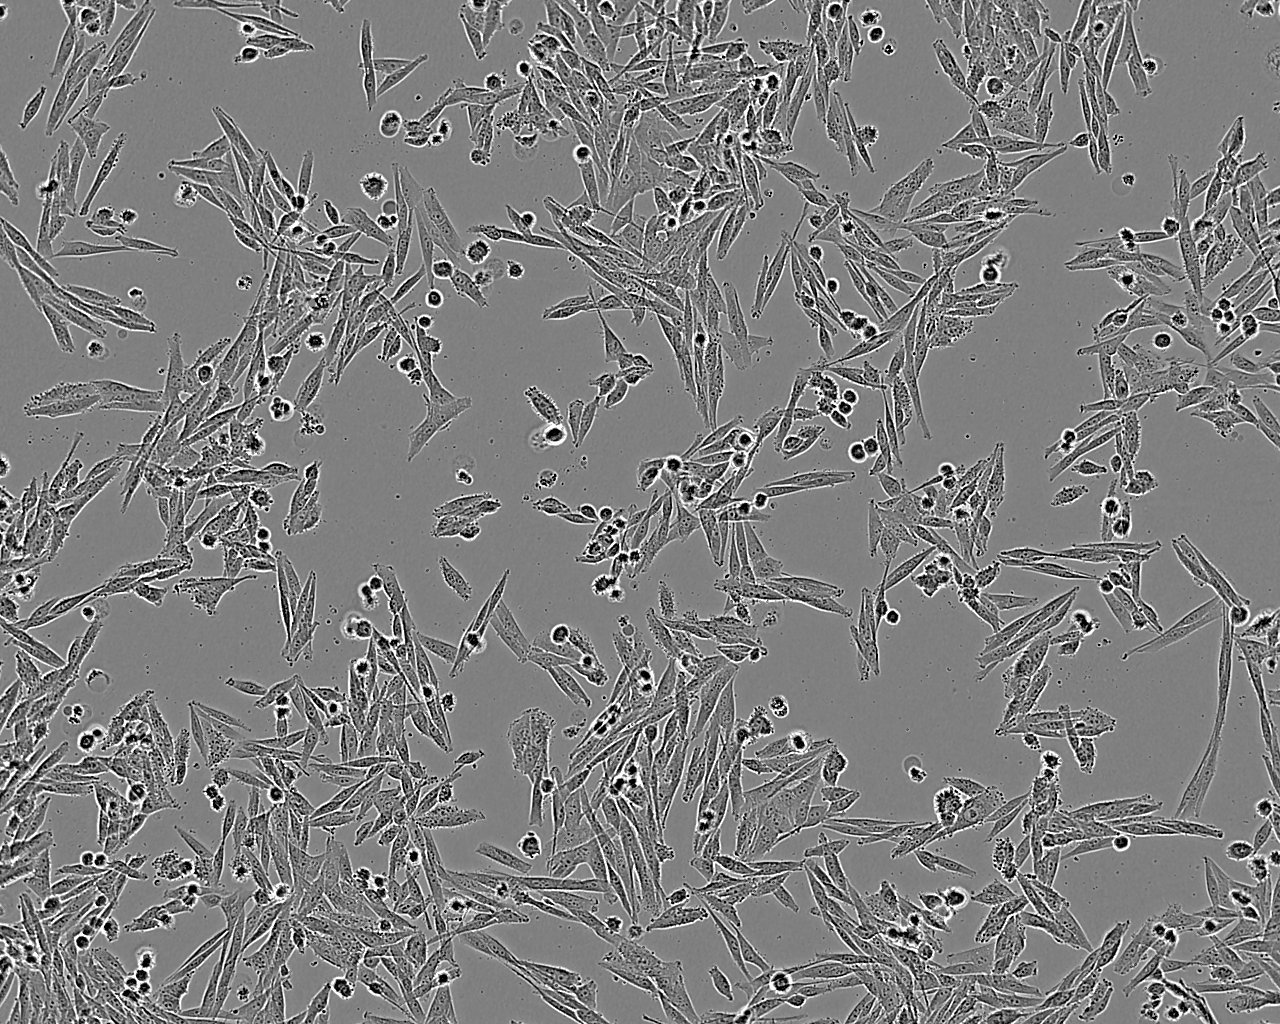 NCI-H295 Cell:人肾上腺皮质癌细胞系